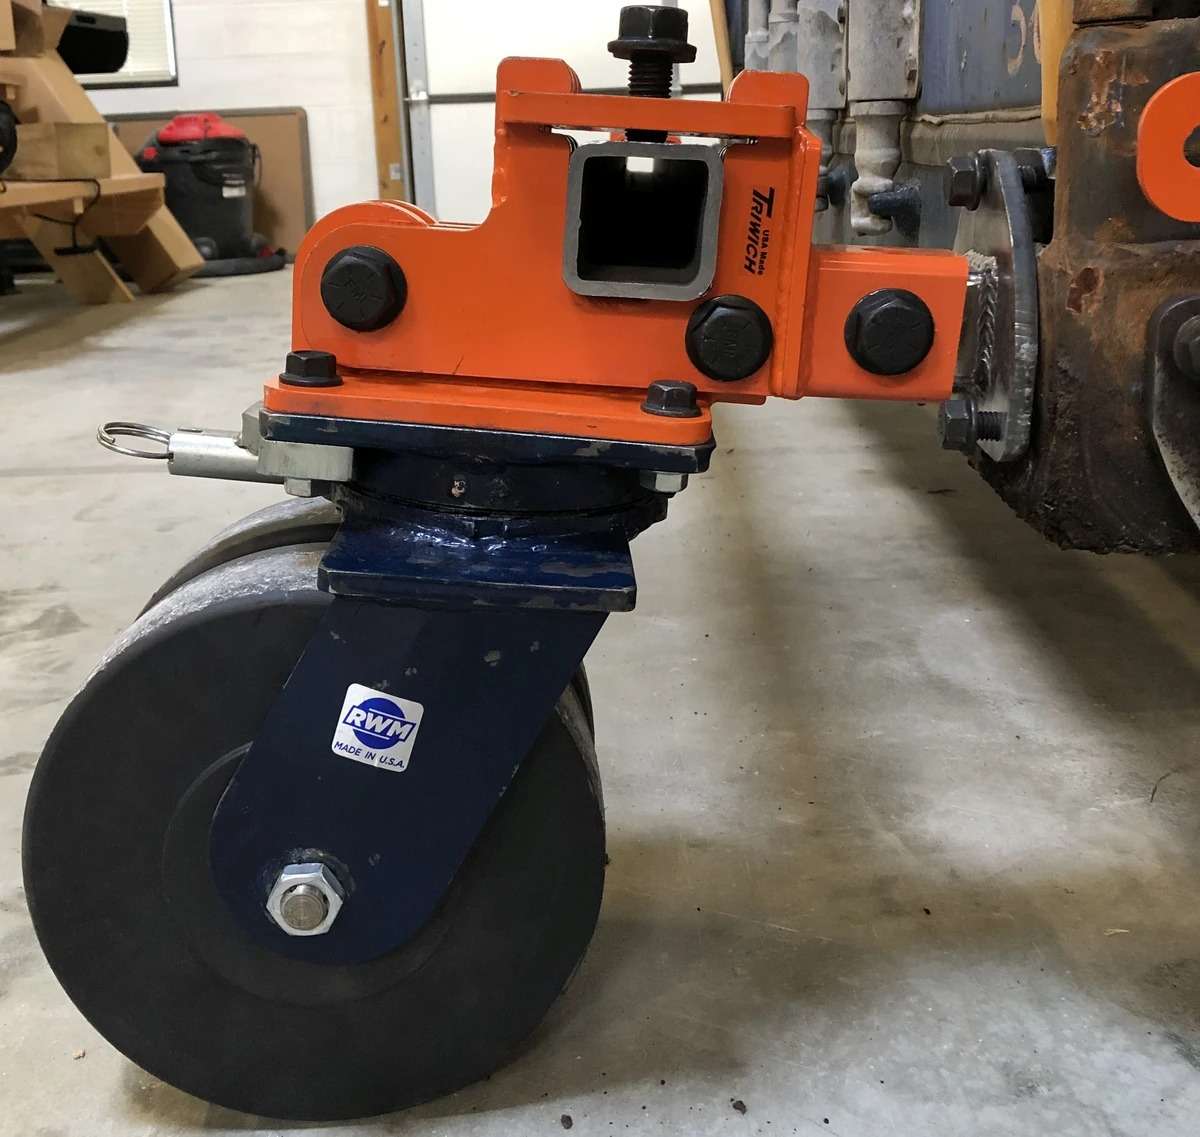 Industrial orange caster wheel on machinery.